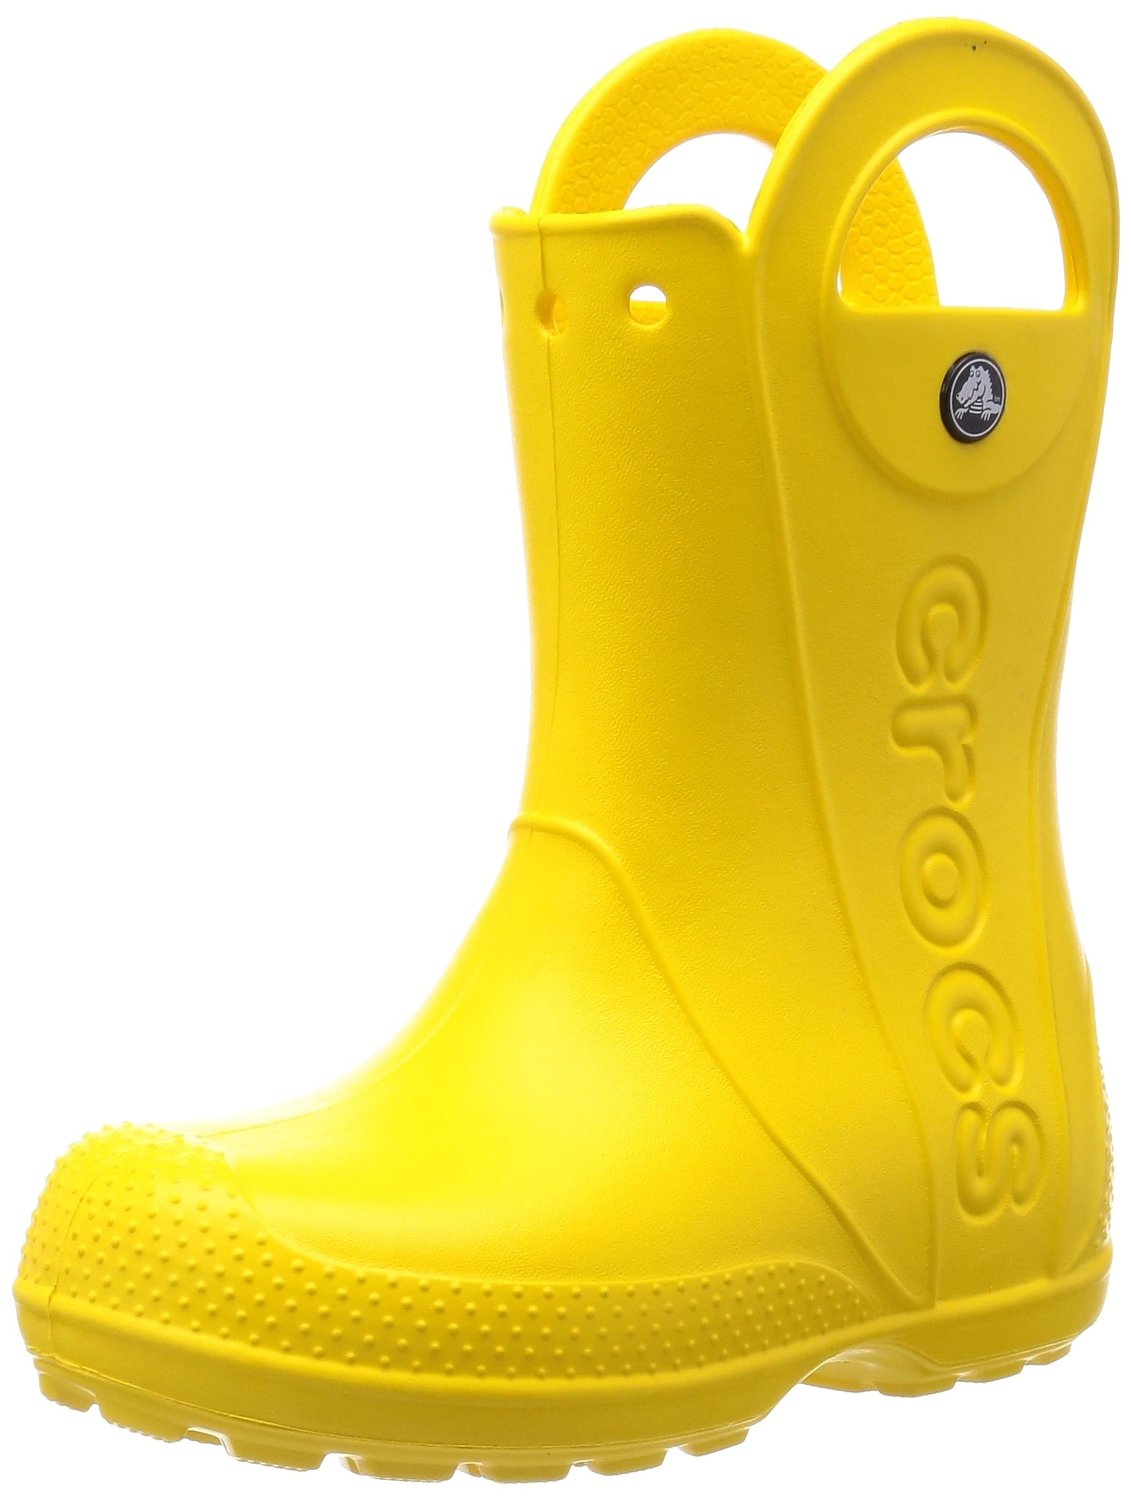 Crocs Kids' Handle It Rain Boot, Yellow, Size 7.0 jwU6 | eBay